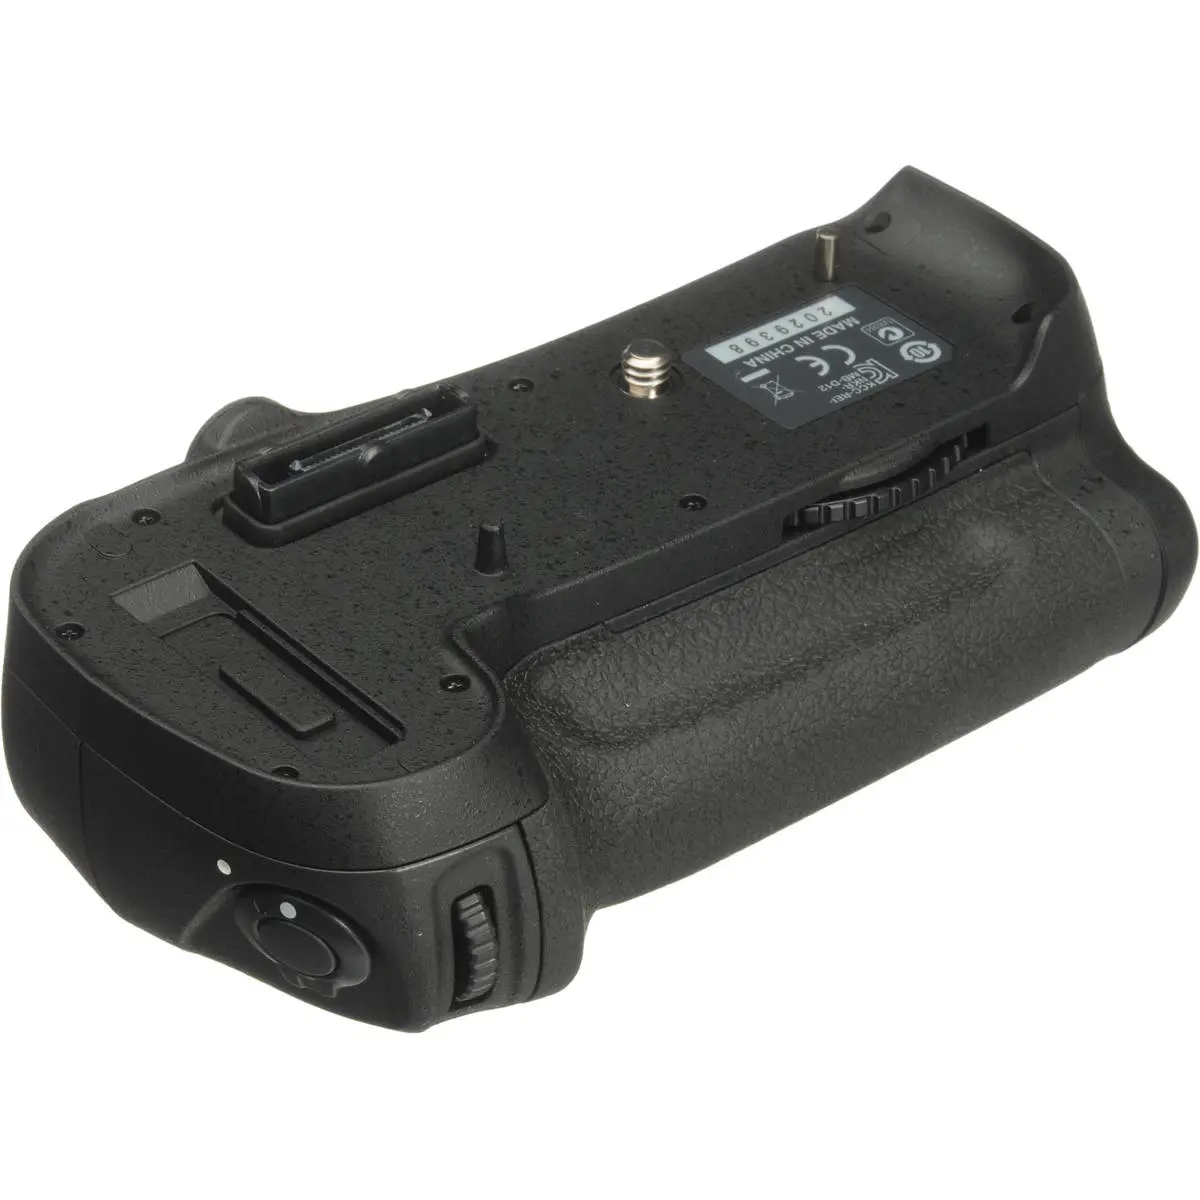 2. Nikon MB-D12 Grip (for D800)